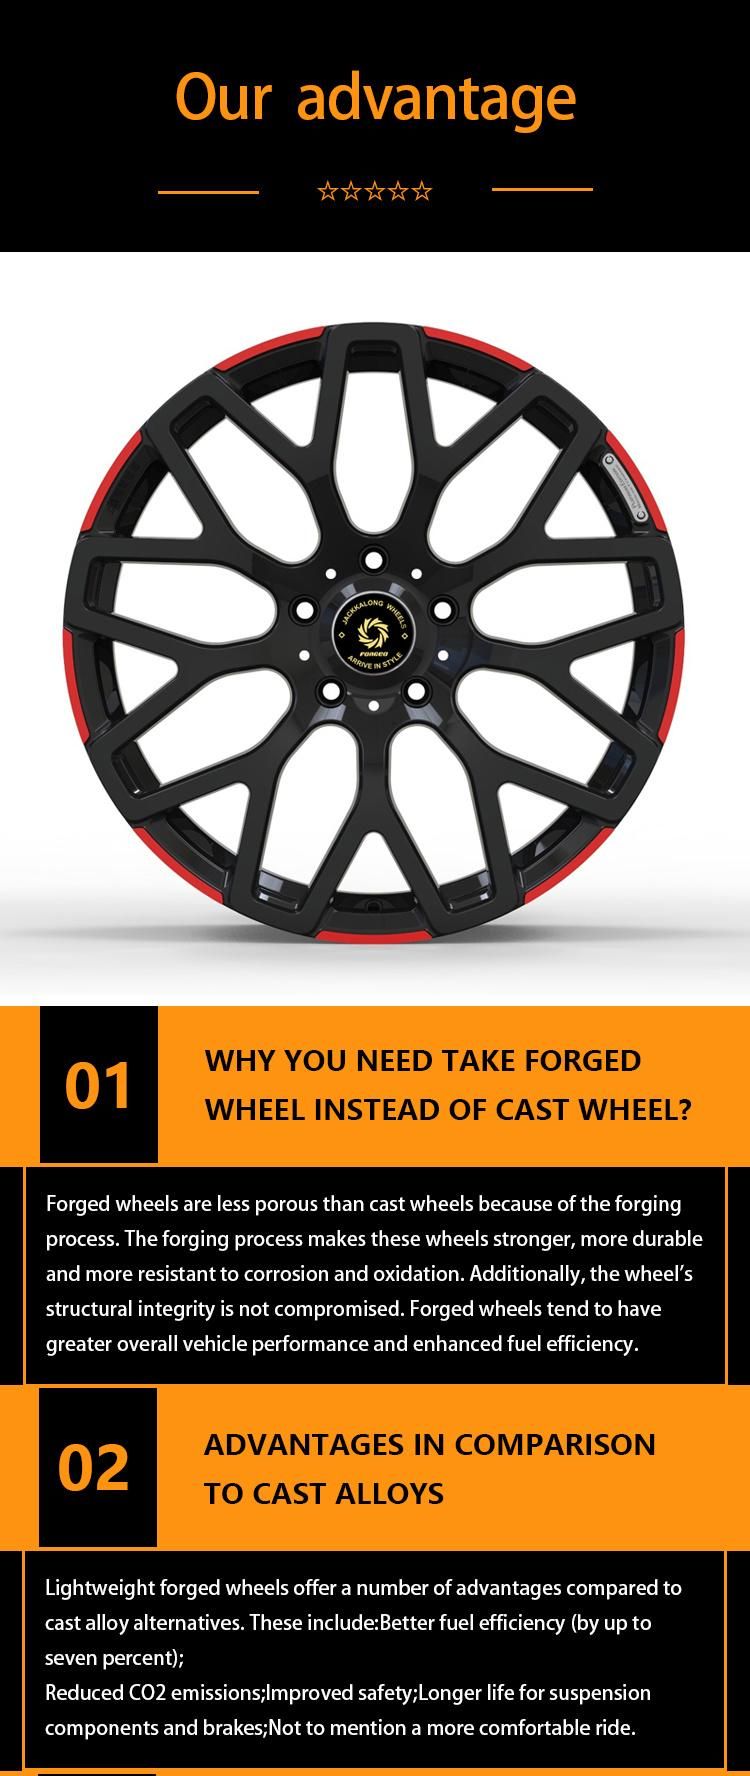 Wheels Forged Monoblock Wheel Rims Deep Dish Rims Sport Rim Aluminum Alloy American Racing Wheels with Glossy Black for BMW